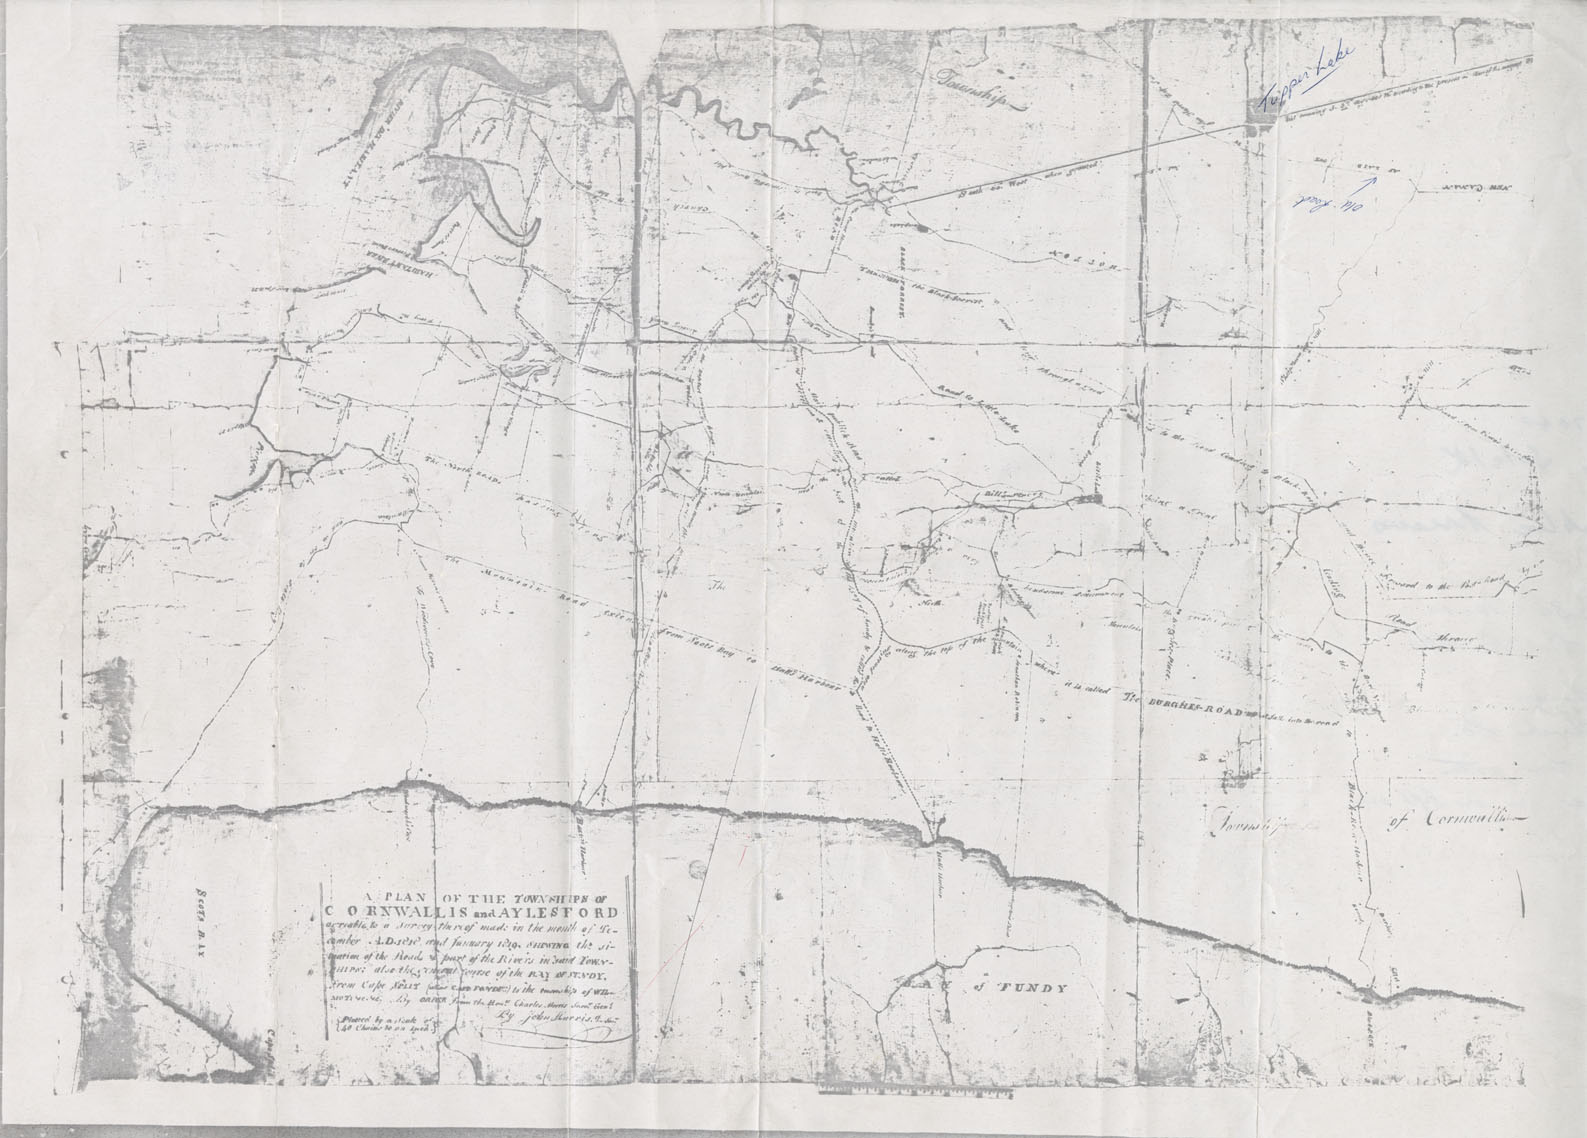 Cornwallis Township A Plan of the Townships of Cornwallis and Aylesford